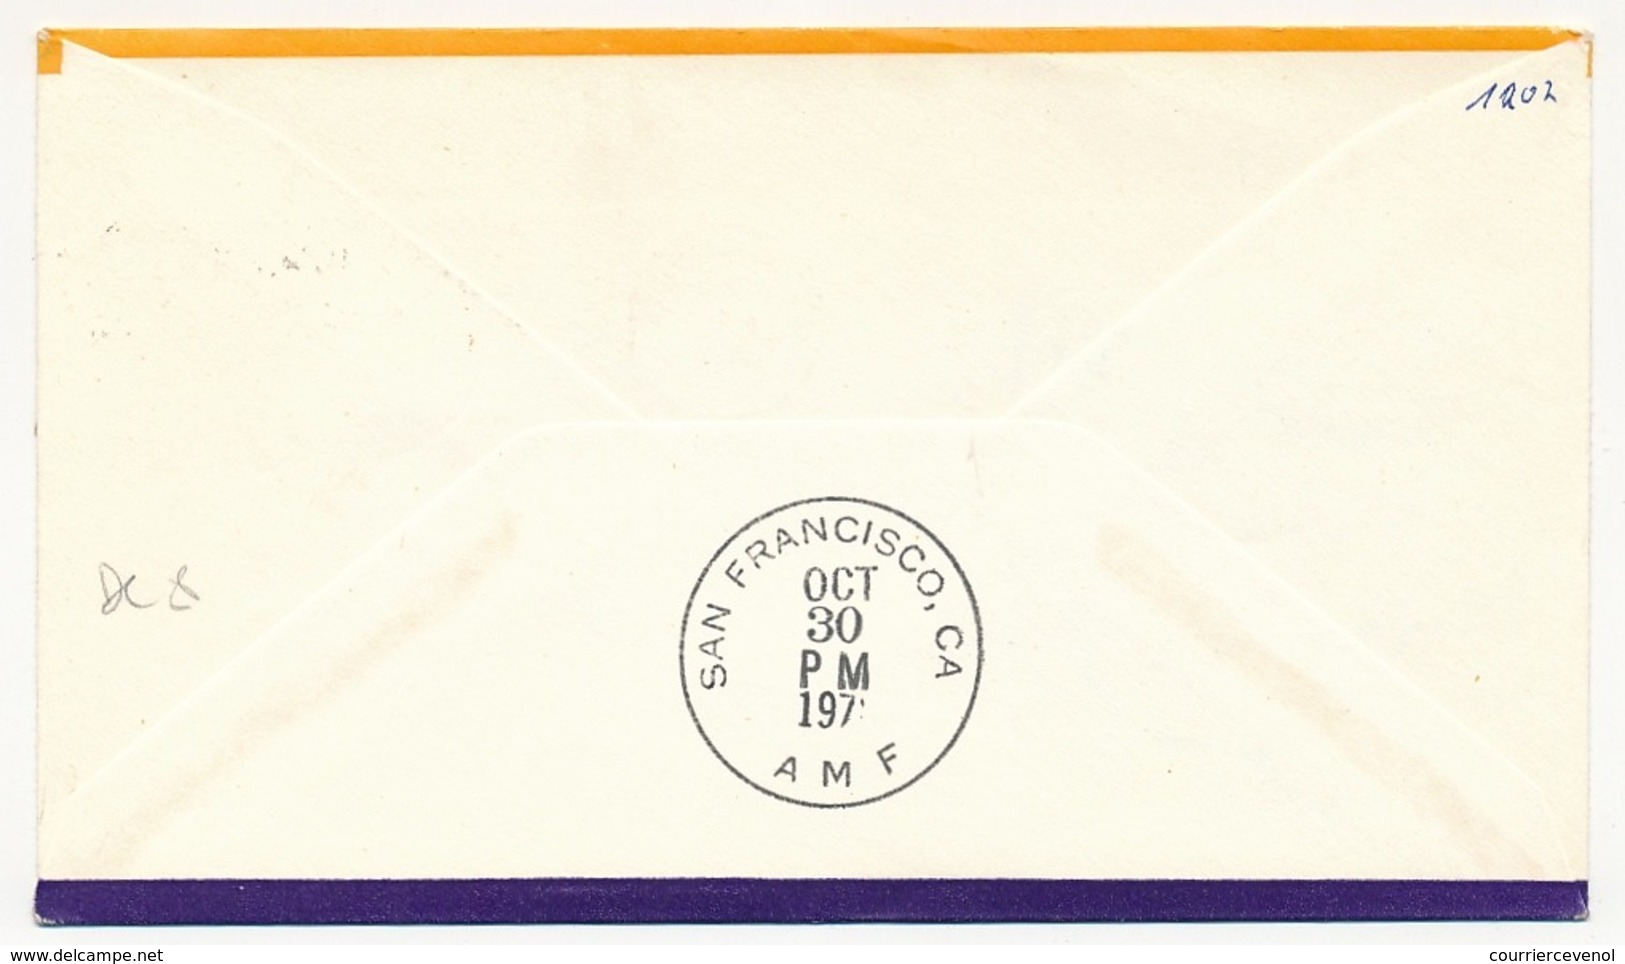 ETATS UNIS - SERBORRO WORLD AIRLINES - Vol Inaugural New Yorl => San Francisco - US Postal Service - 30 Oct 1978 - 3c. 1961-... Lettres